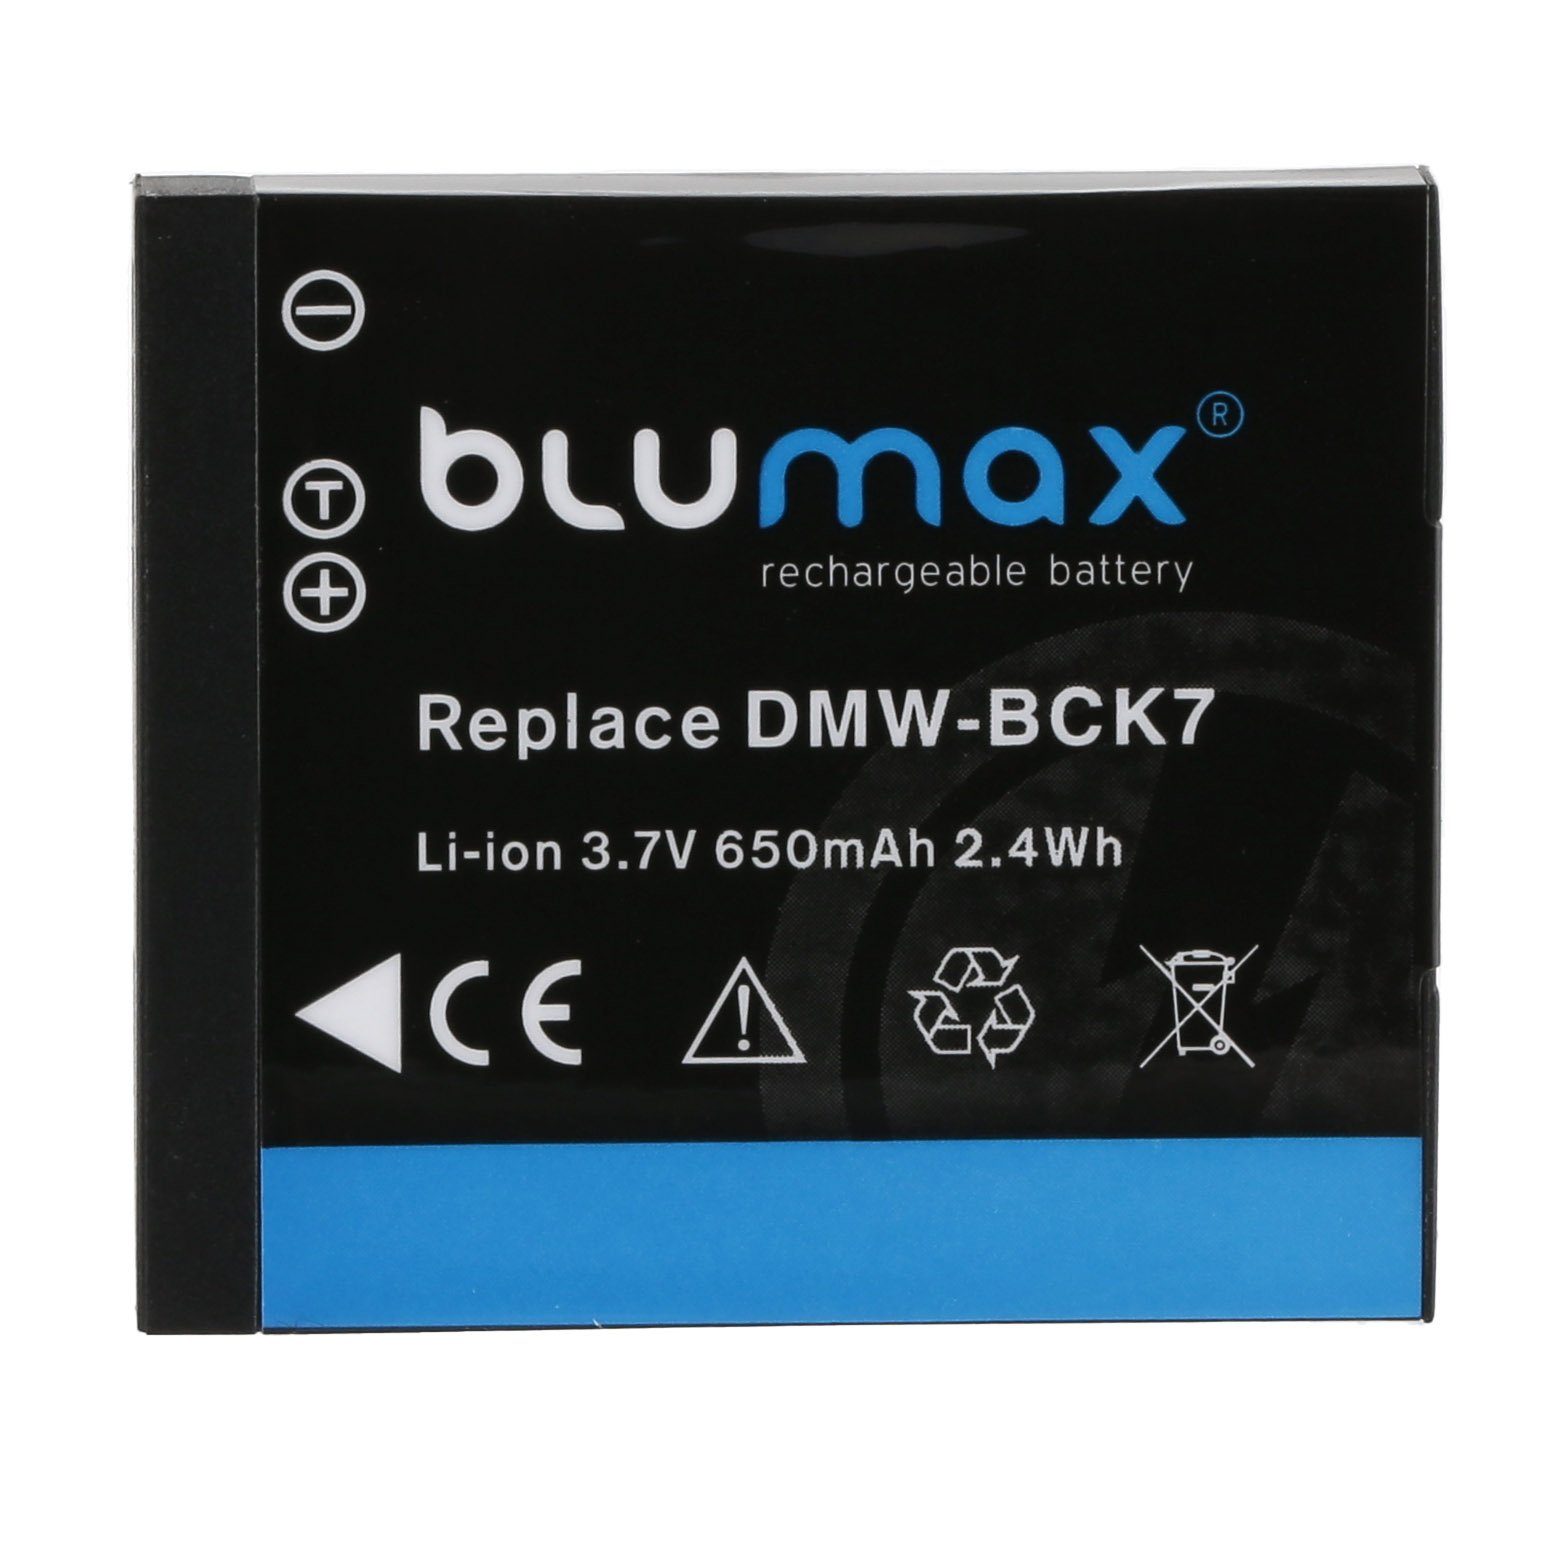 Kamera-Akku mAh Panasonic DMW-BCK7 passend 3,6V Blumax für Akku 650